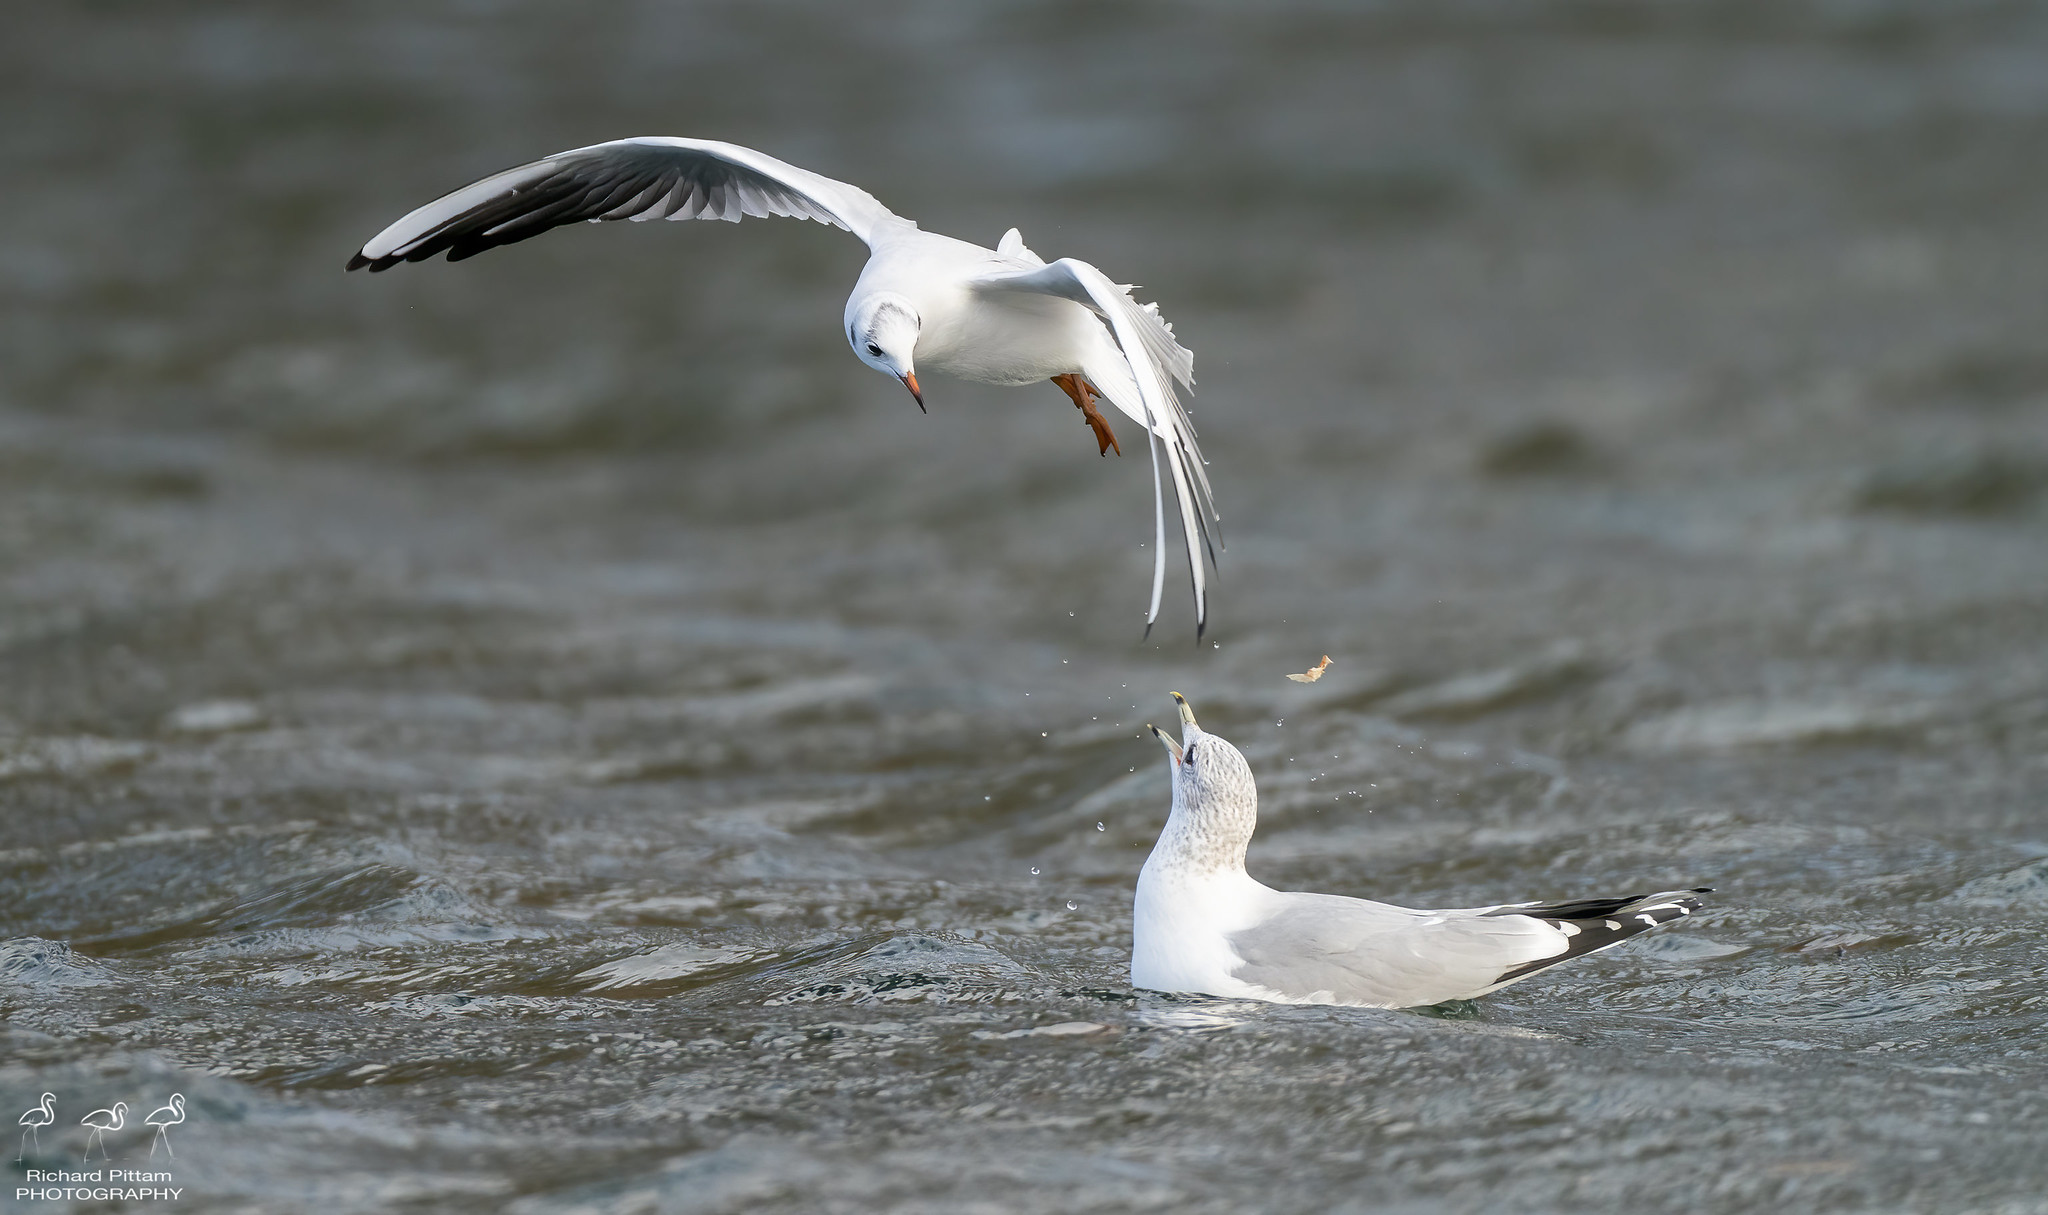 Black-headedand Common Gull dispute